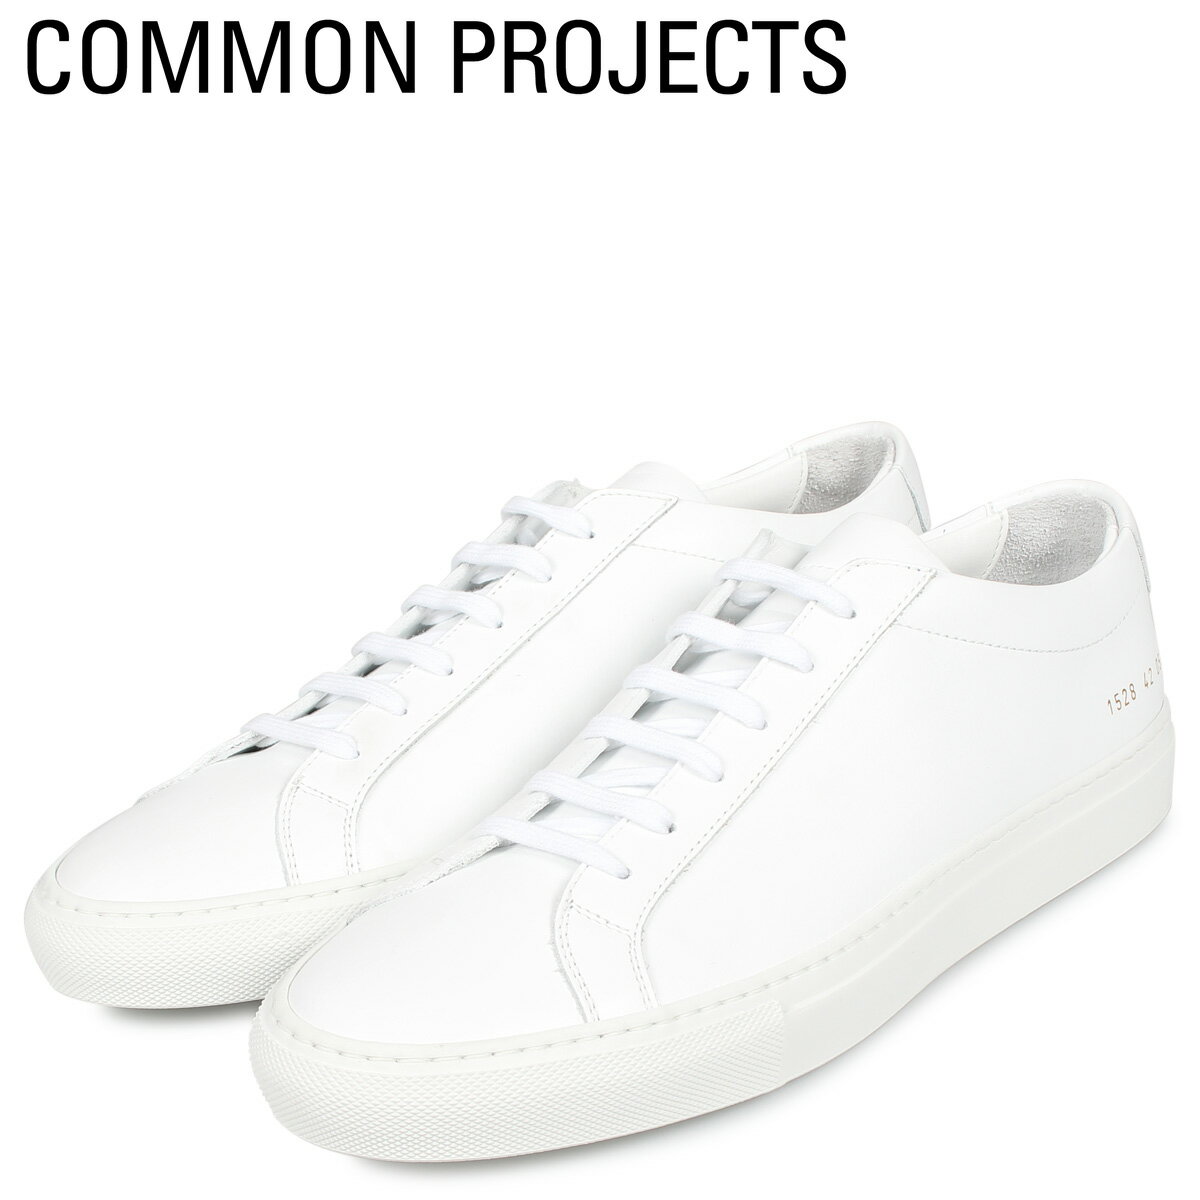 Common Projects コモンプロジェクト アキレス ロー スニーカー メンズ ACHILLES LOW ホワイト 白 1528-0506